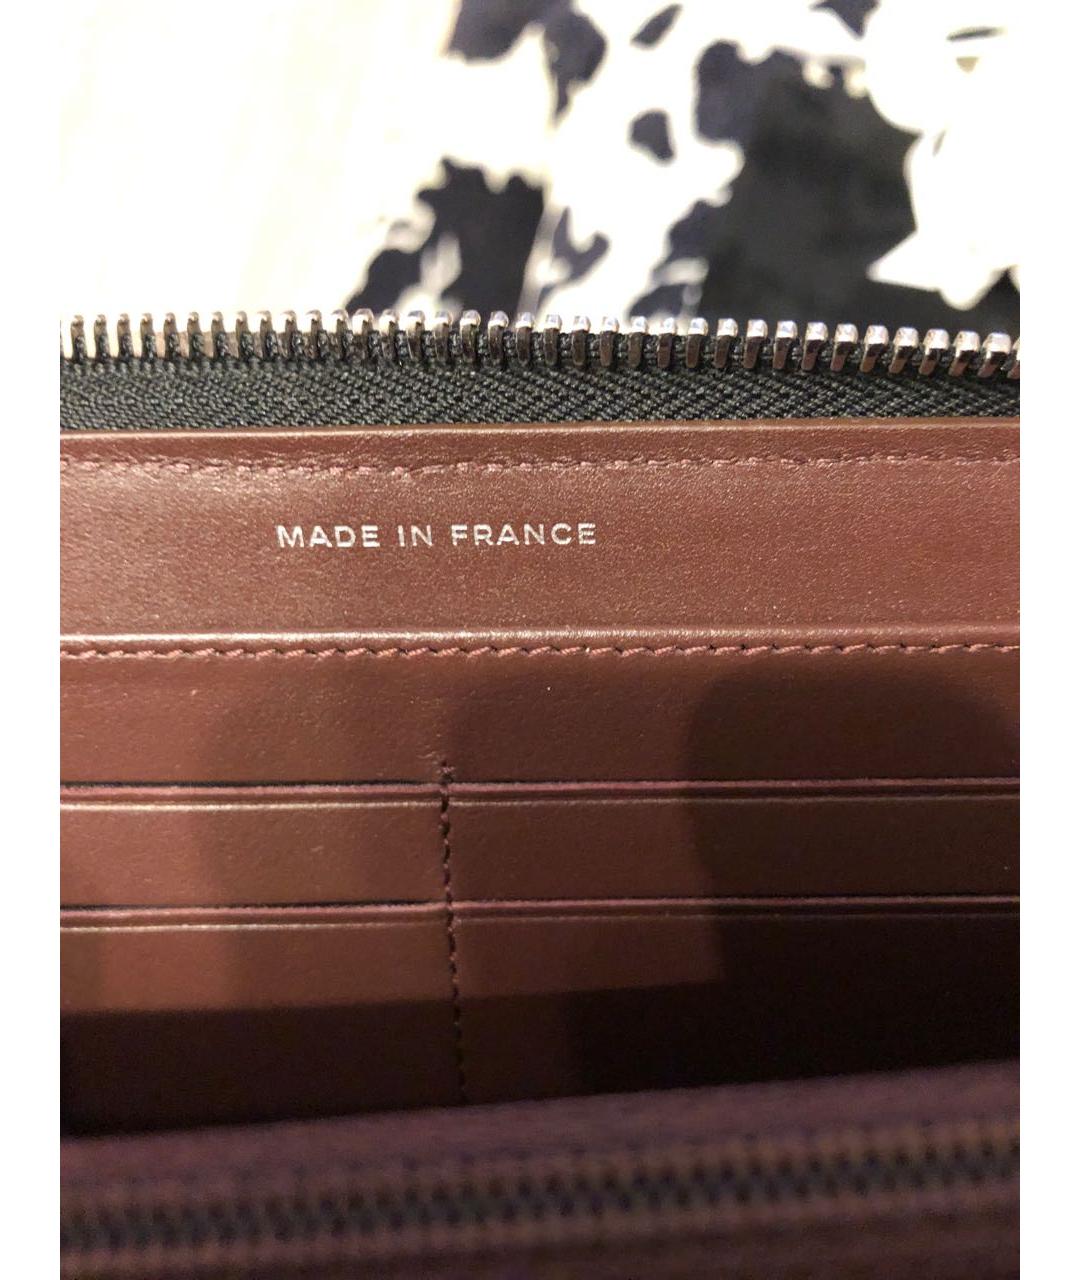 CHANEL PRE-OWNED Черный кожаный кошелек, фото 4